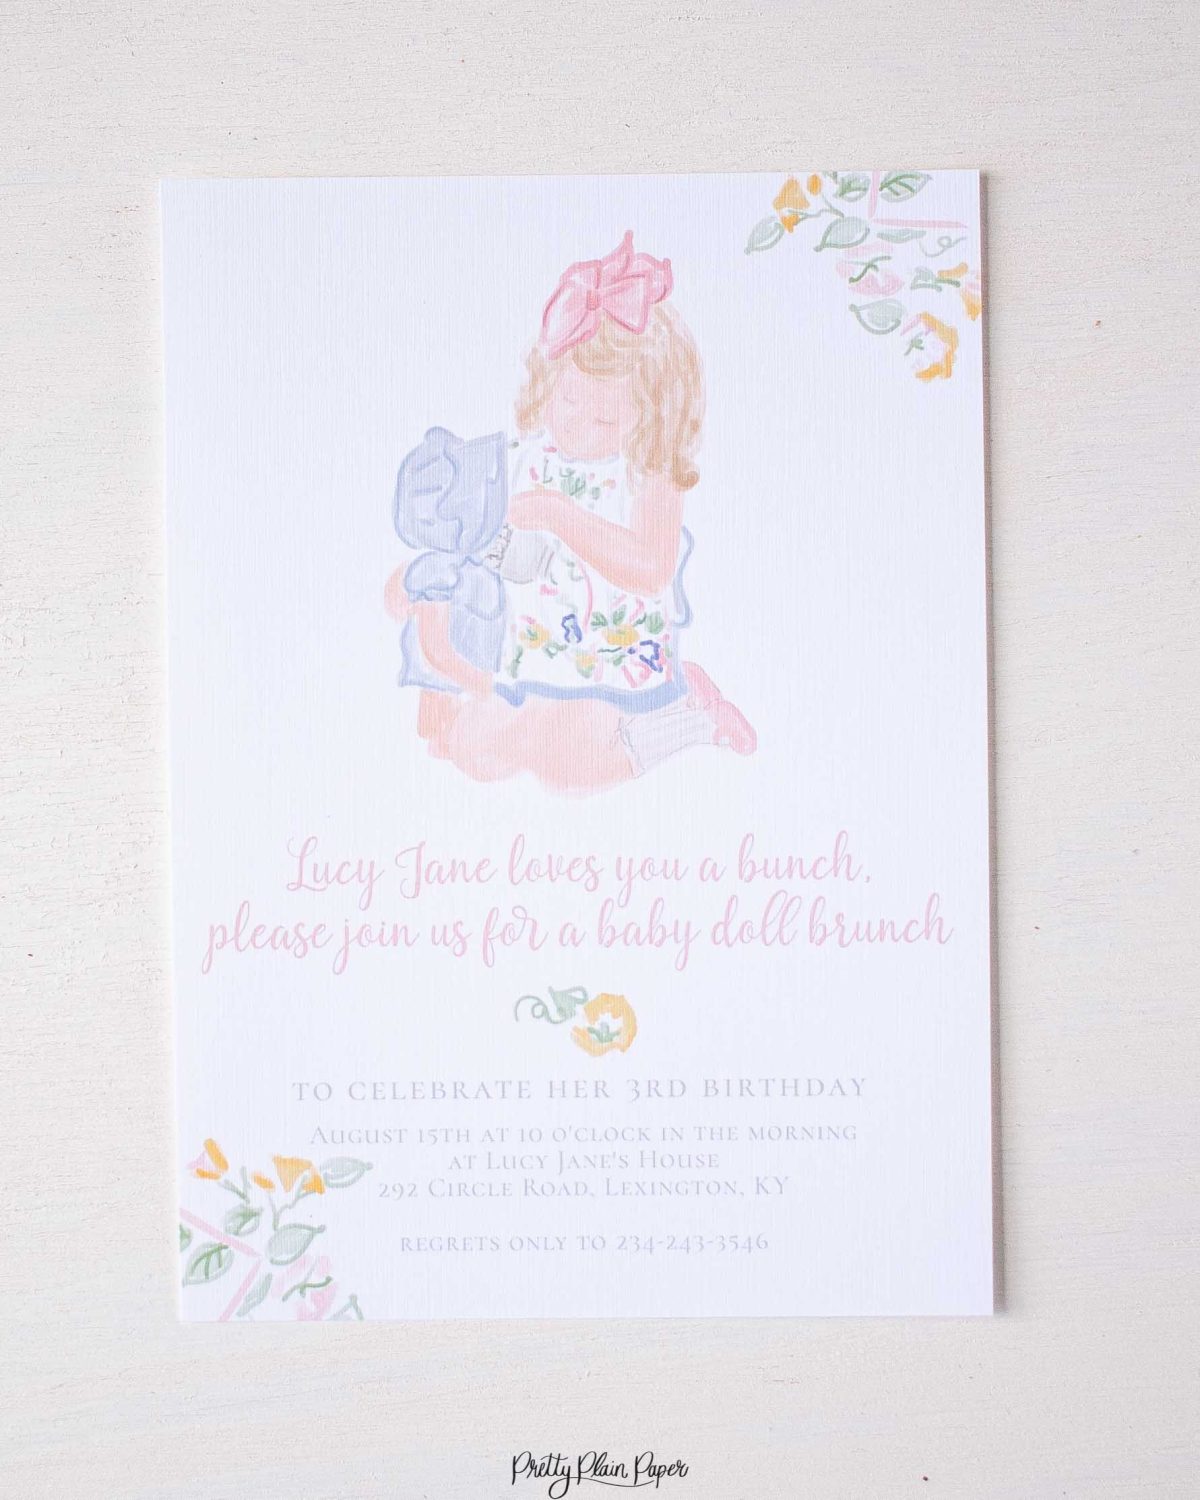 Baby Doll Birthday Party Invitation by Pretty Plain Paper